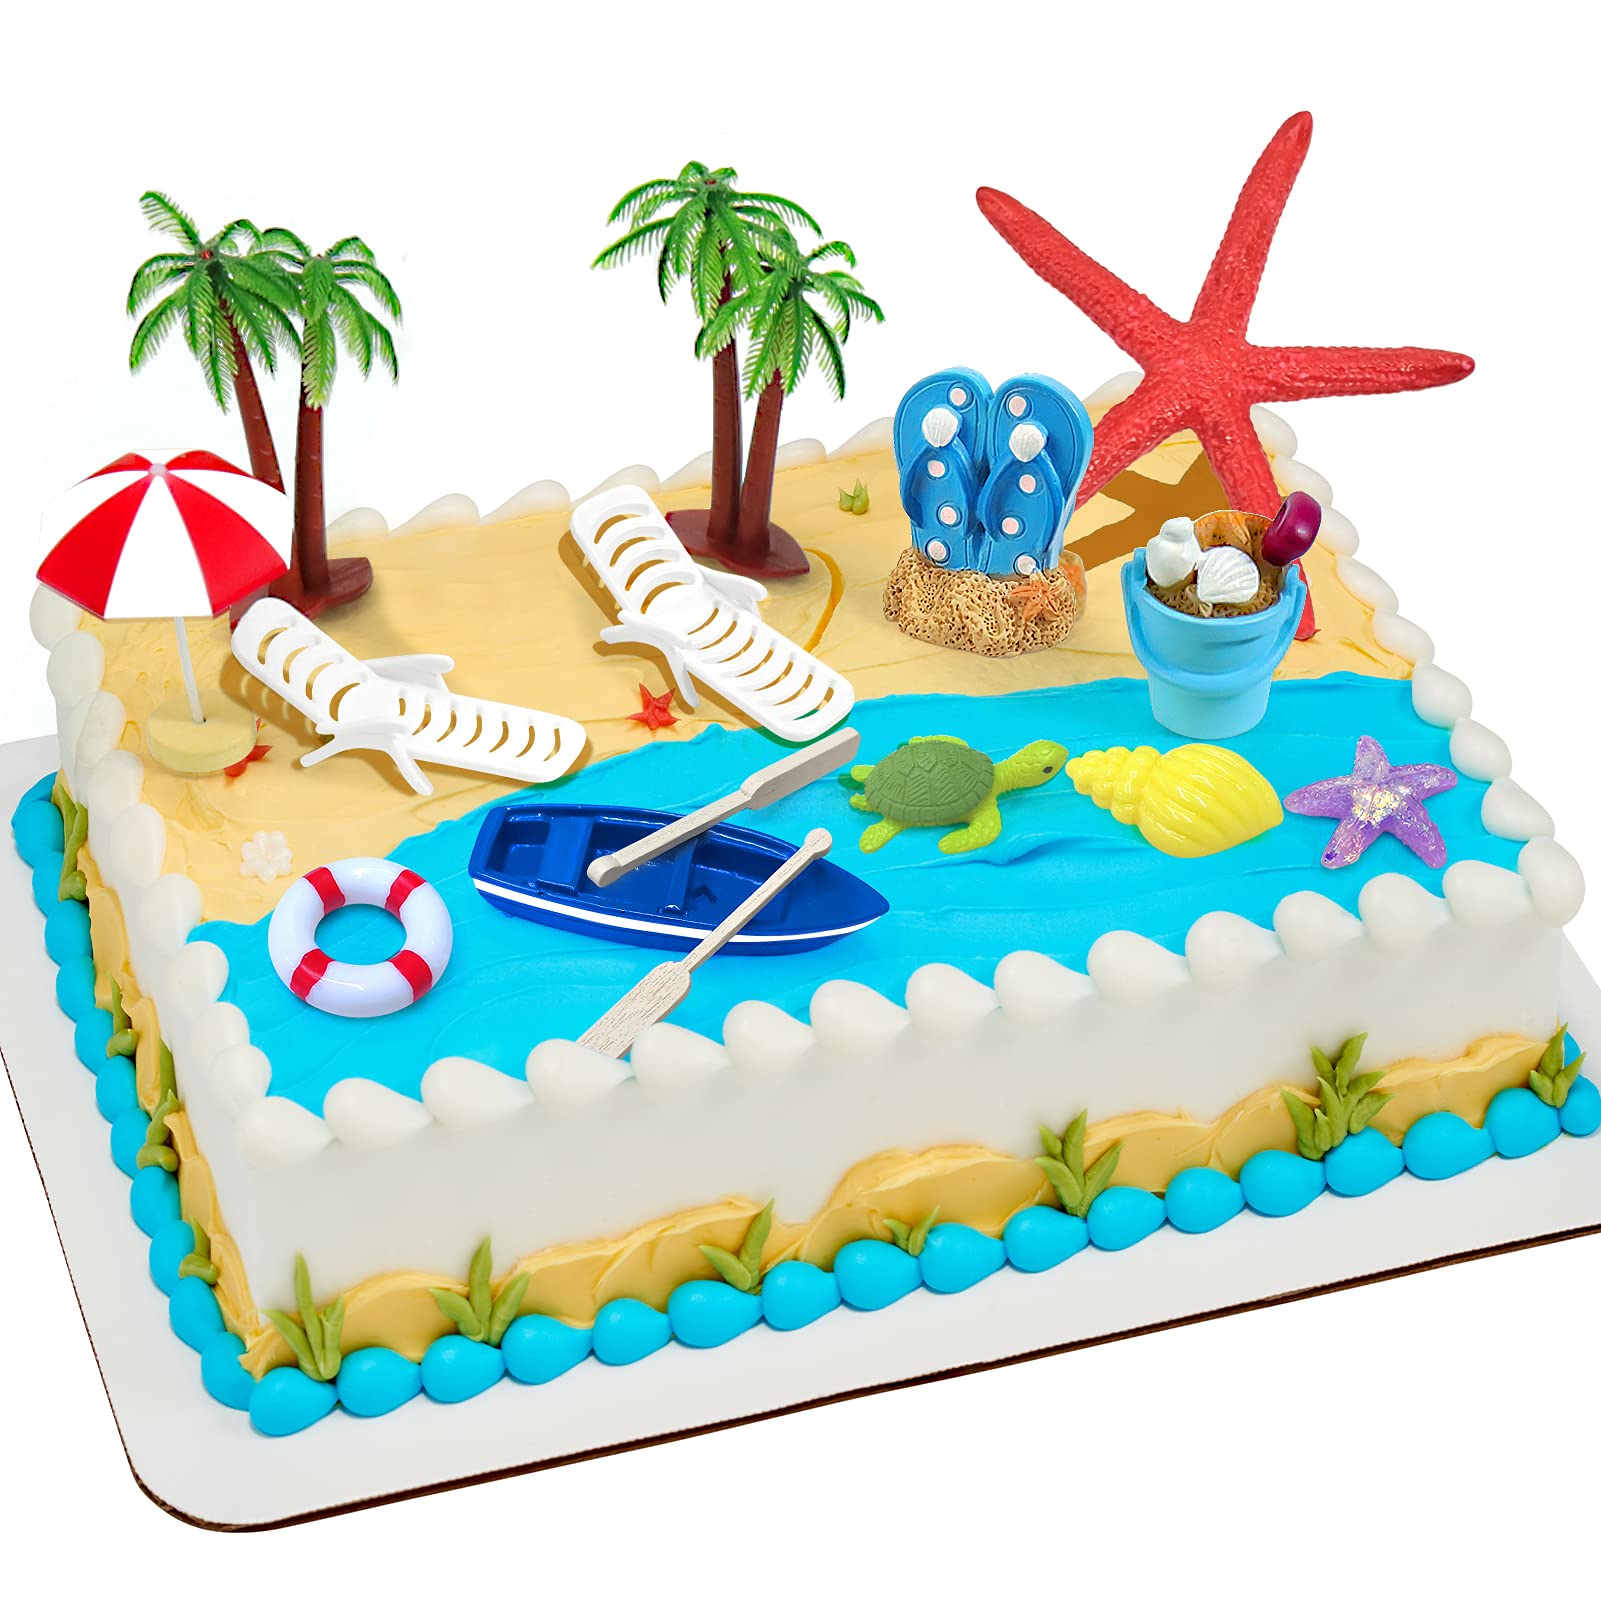 LOLLIPOPS RAINBOW SWIRLY LOLLIE 30g CAKE TOPPERS KIDS PARTY BAGS HALAL  VEGAN | eBay